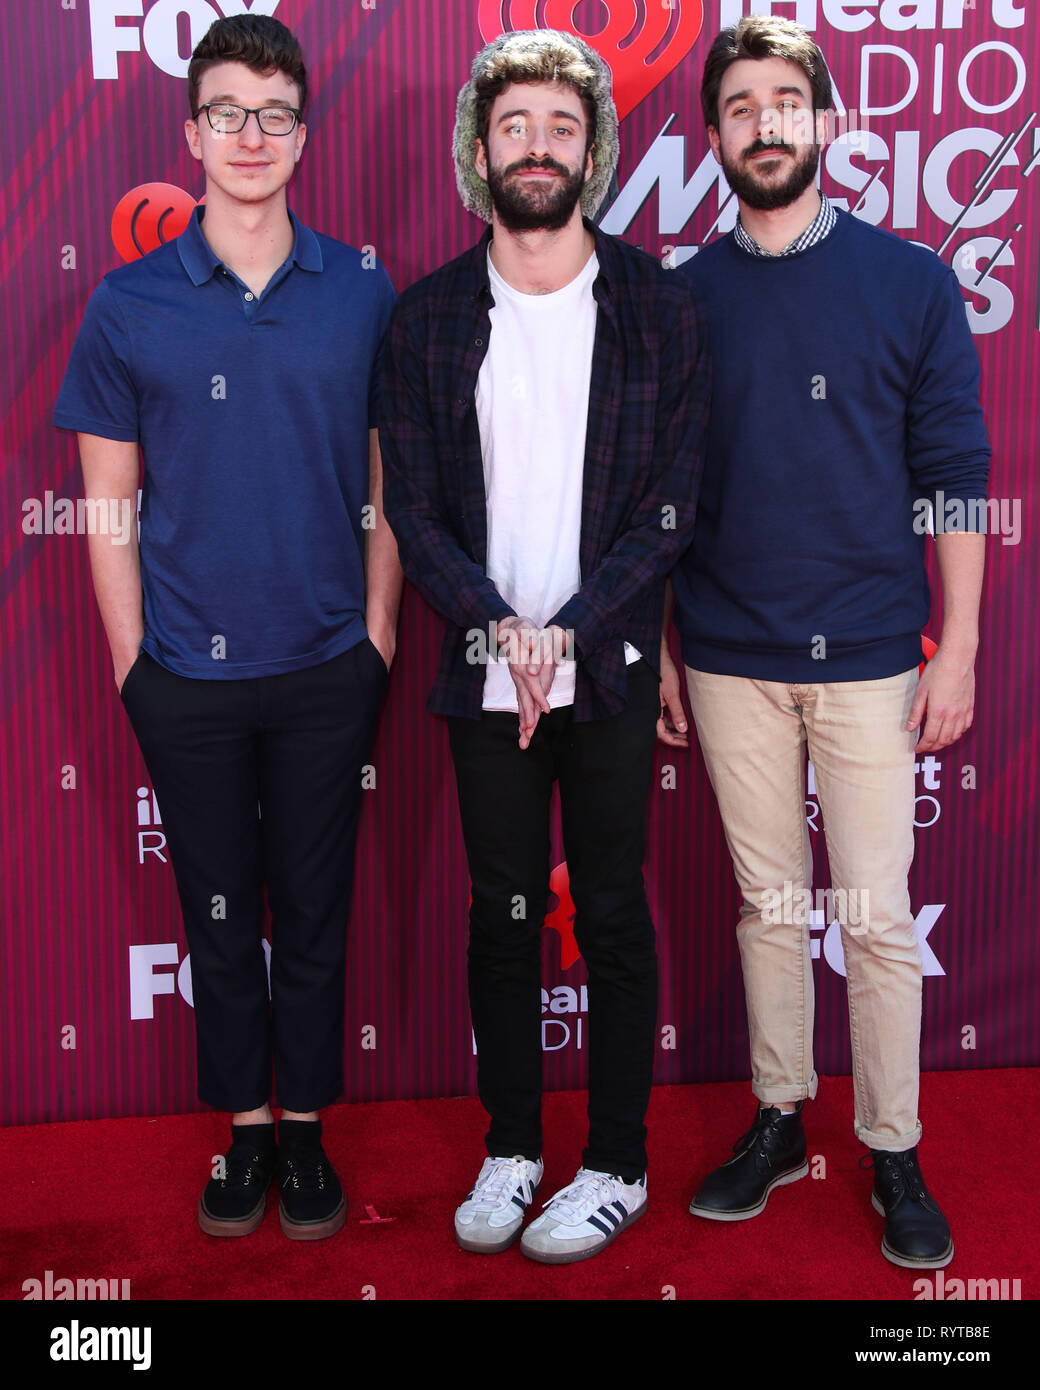 LOS ANGELES, CA, USA - MARCH 14: Ryan Joshua Met, Jack Evan Met and Adam  Brett Met of AJR arrive at the 2019 iHeartRadio Music Awards held at  Microsoft Theater at L.A.